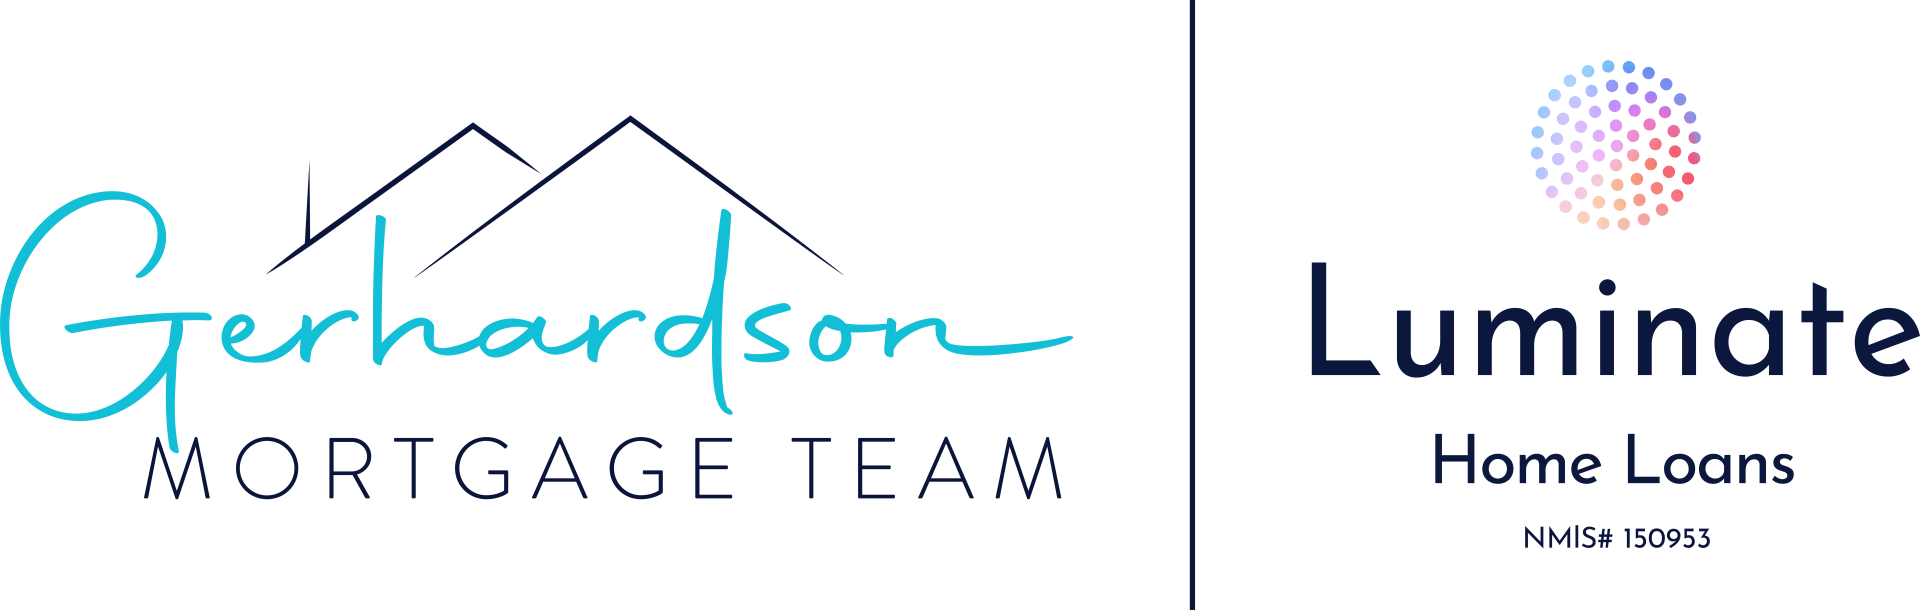 Gerhardson Mortgage Team and Luminate logo